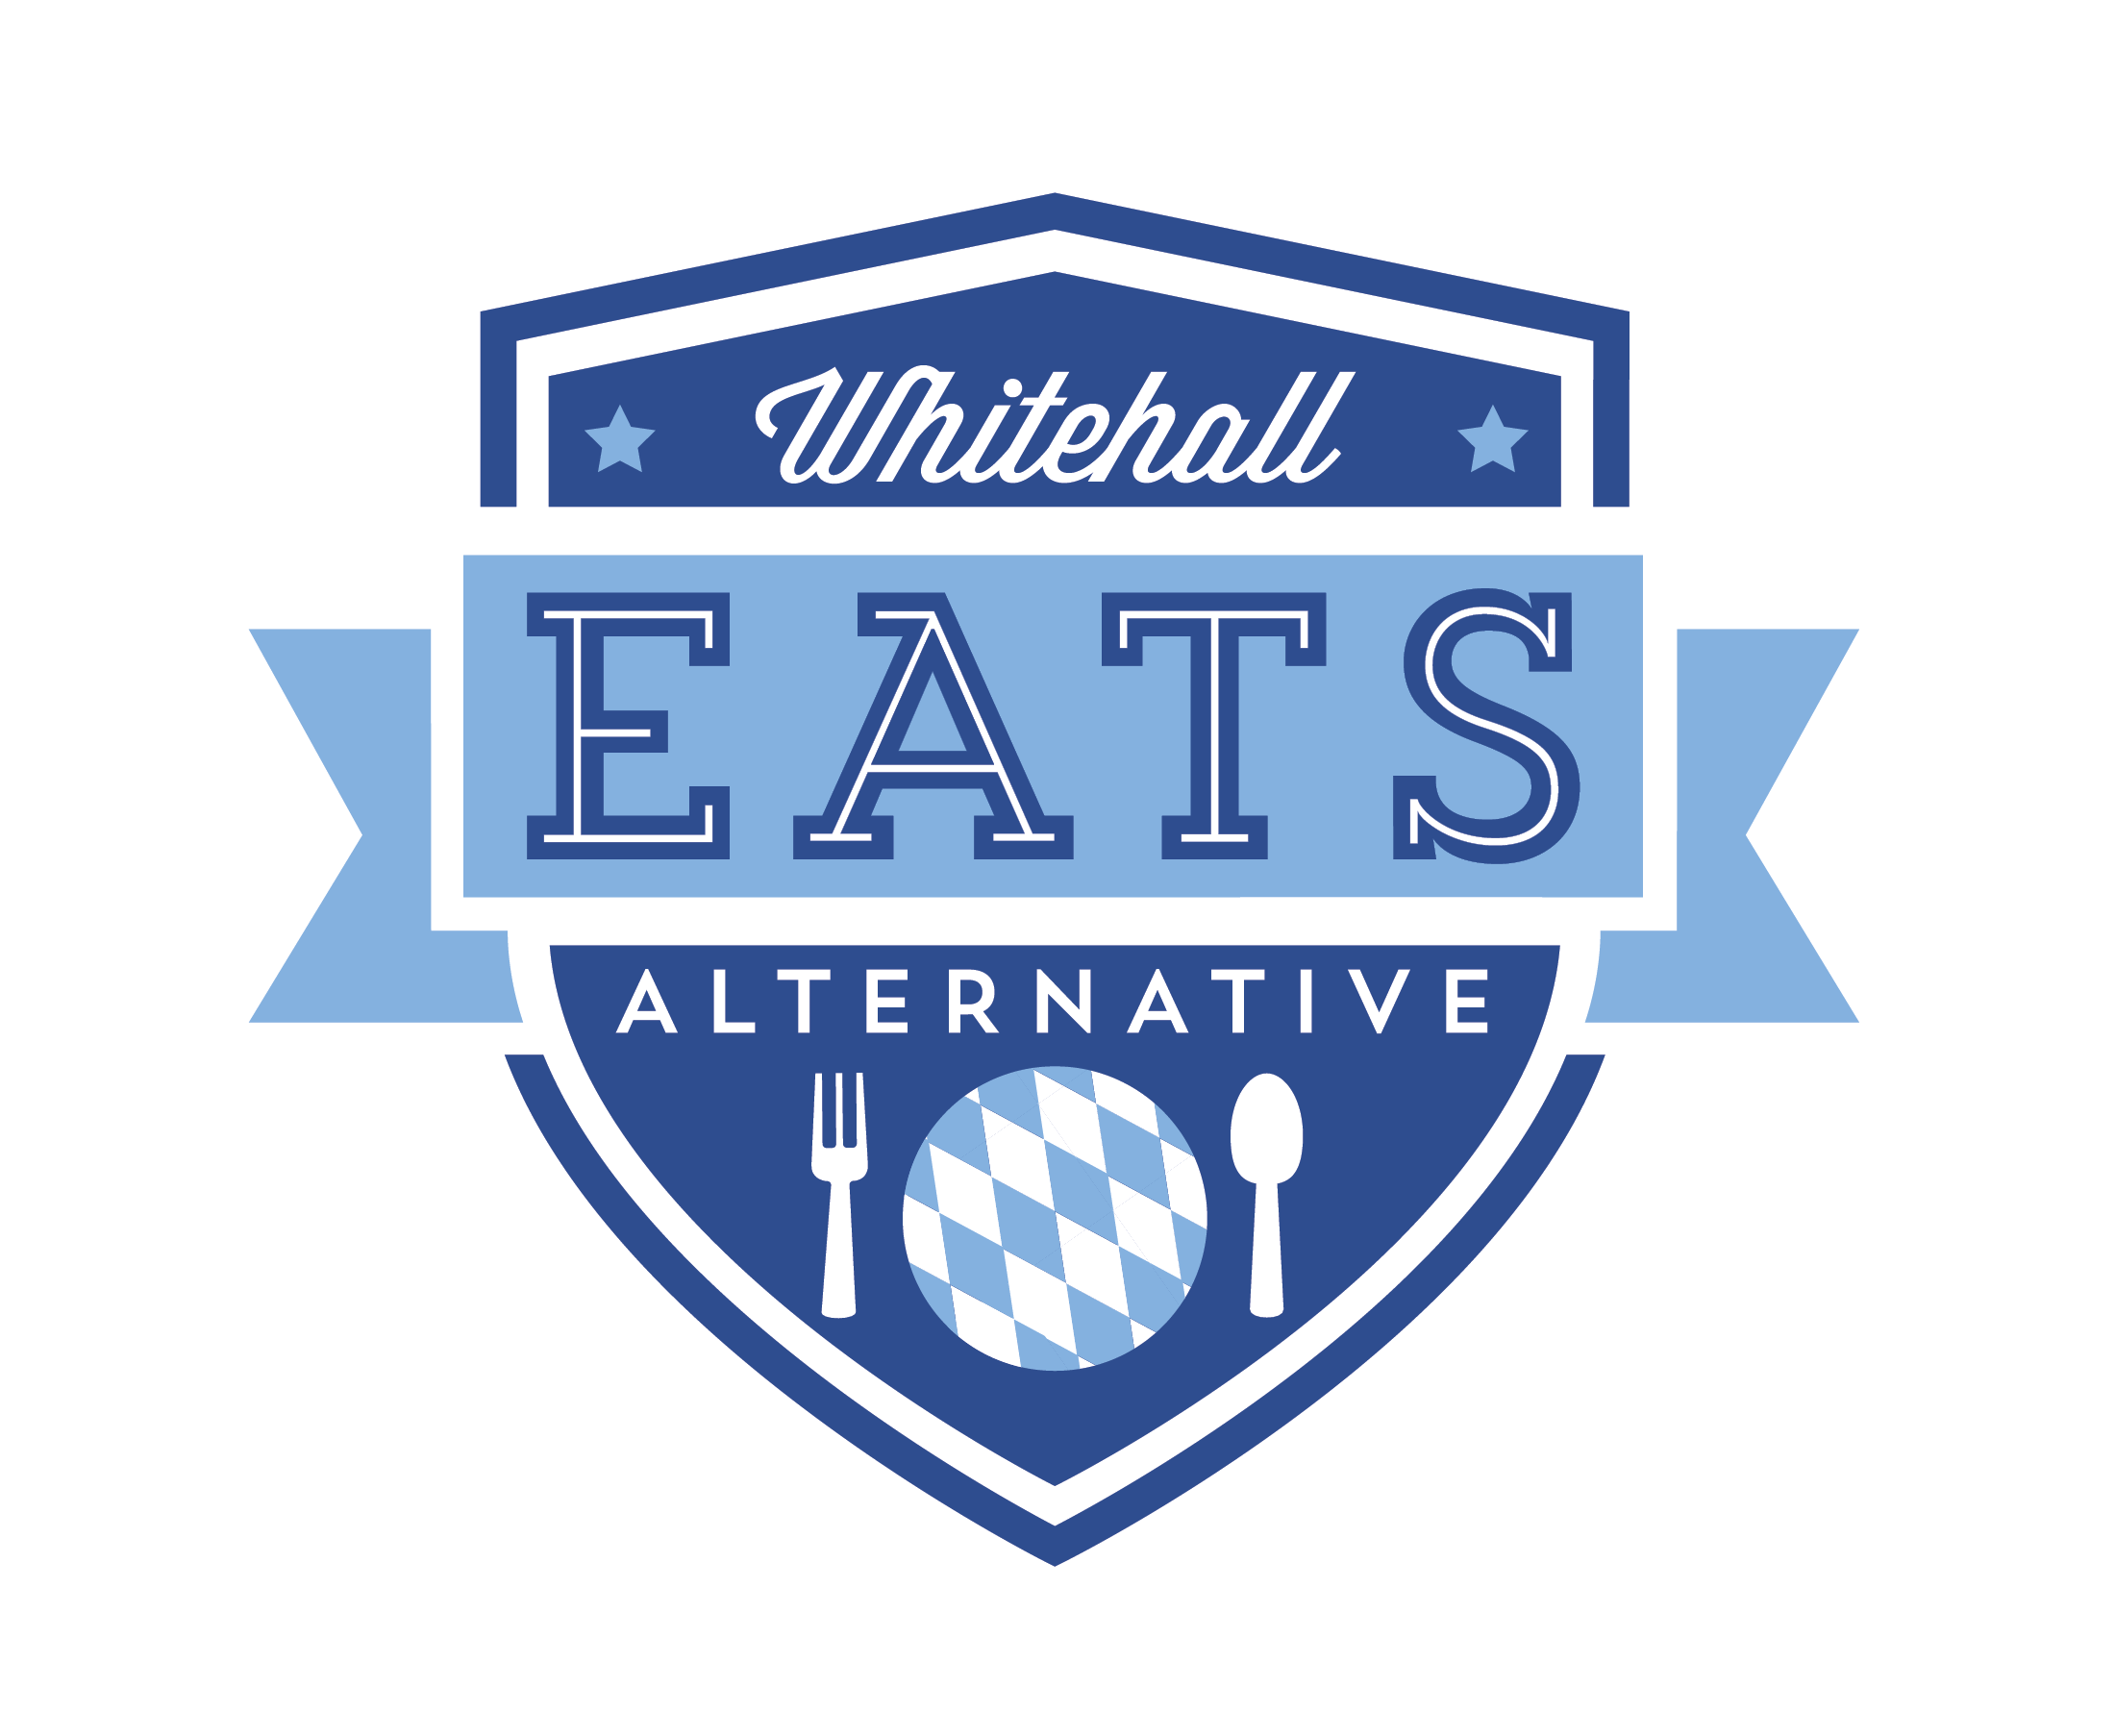 Whitehall Eats Alternative